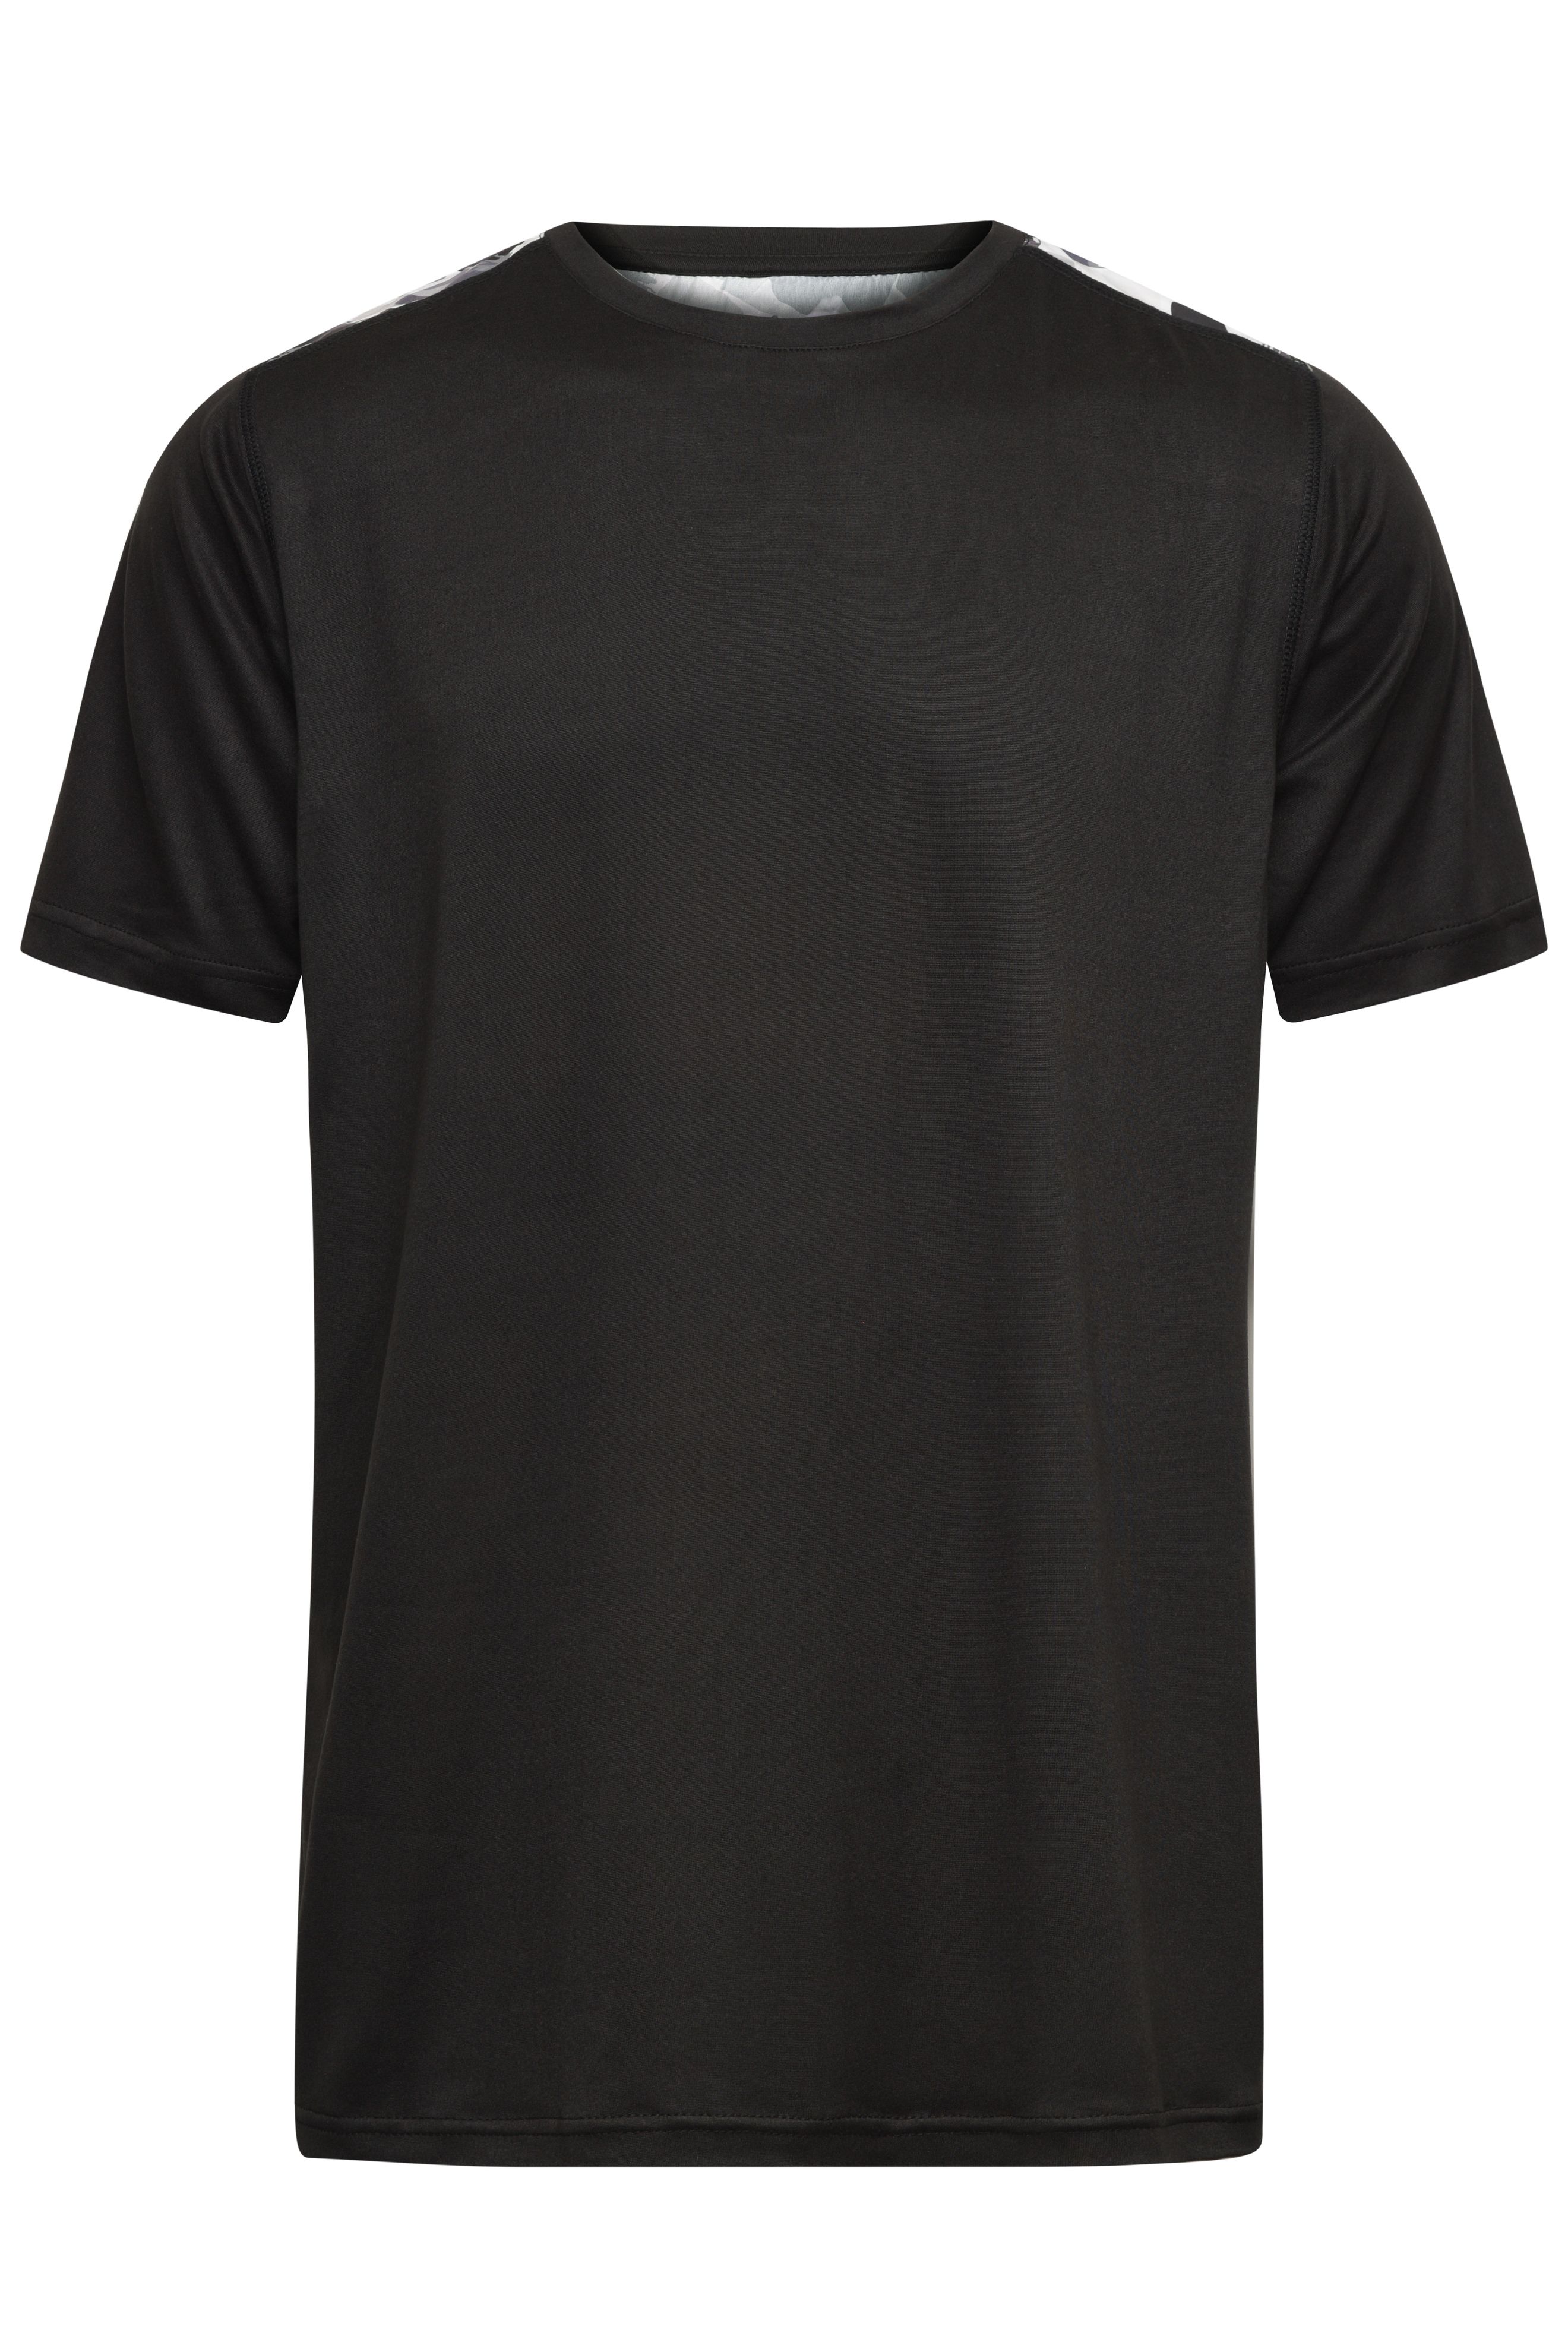 Men Men's Sports Shirt Black/black-printed-Daiber